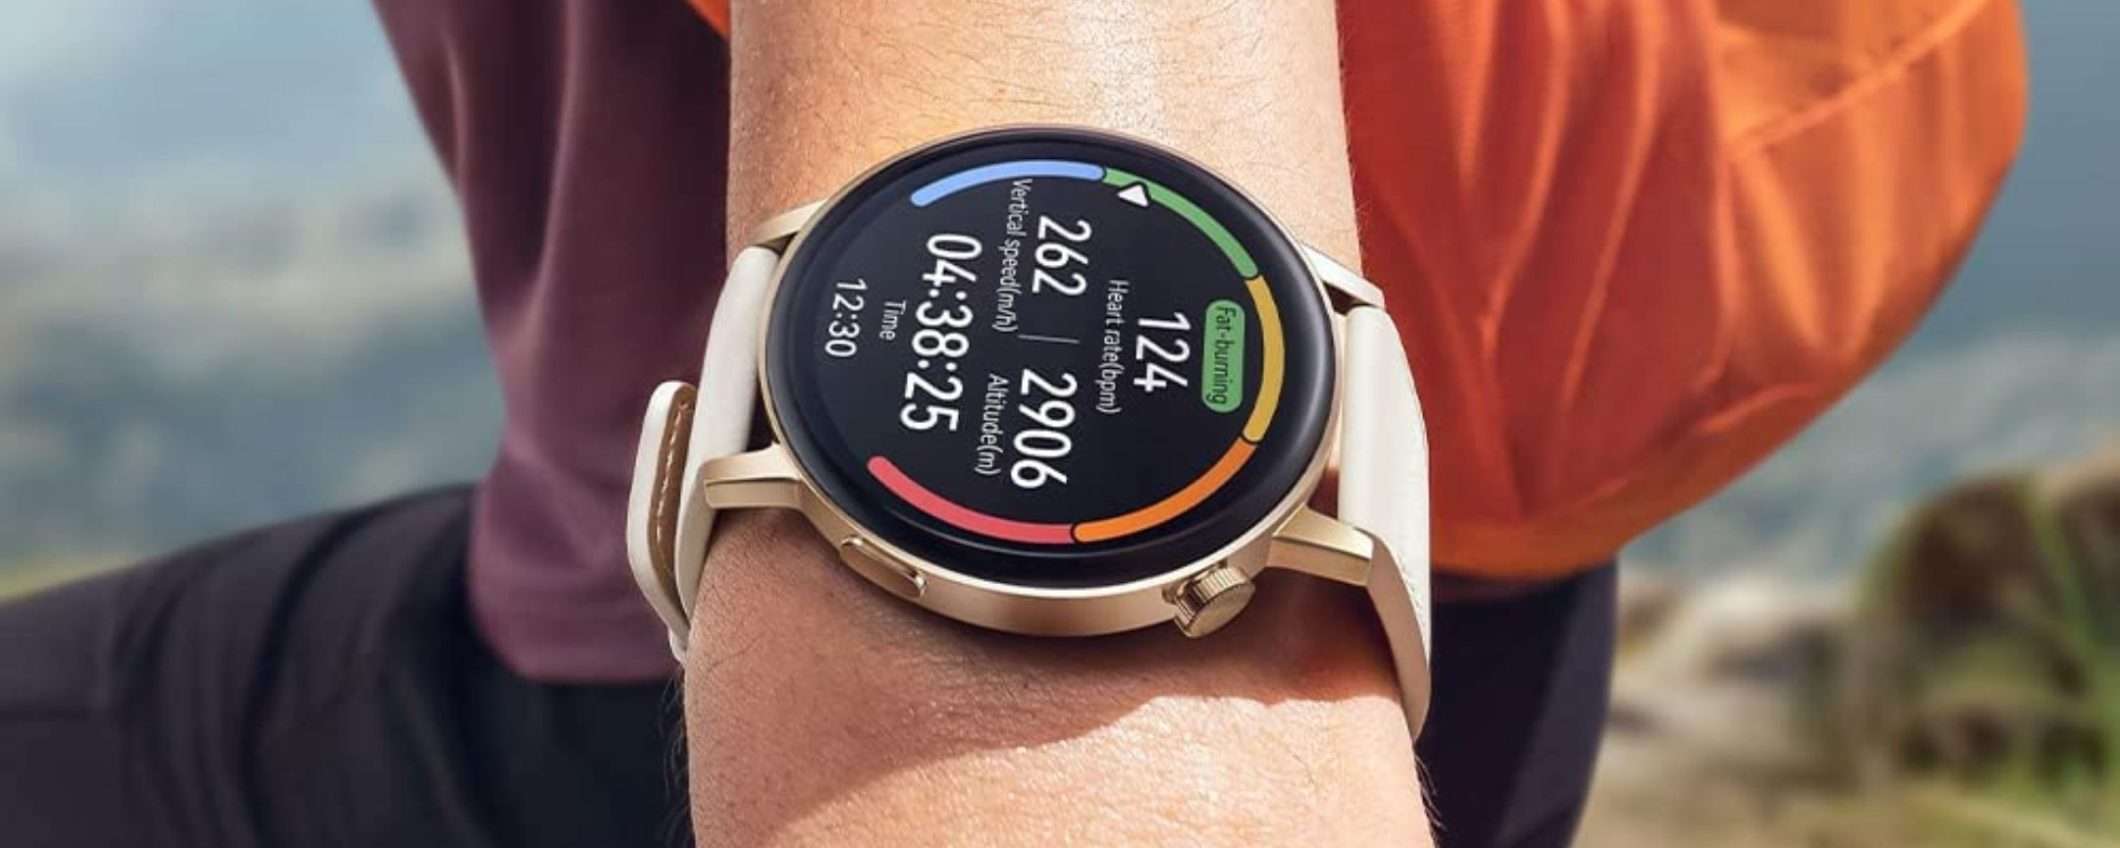 Huawei Watch 3: -20% su Amazon per l'OTTIMO smartwatch (anche a rate)